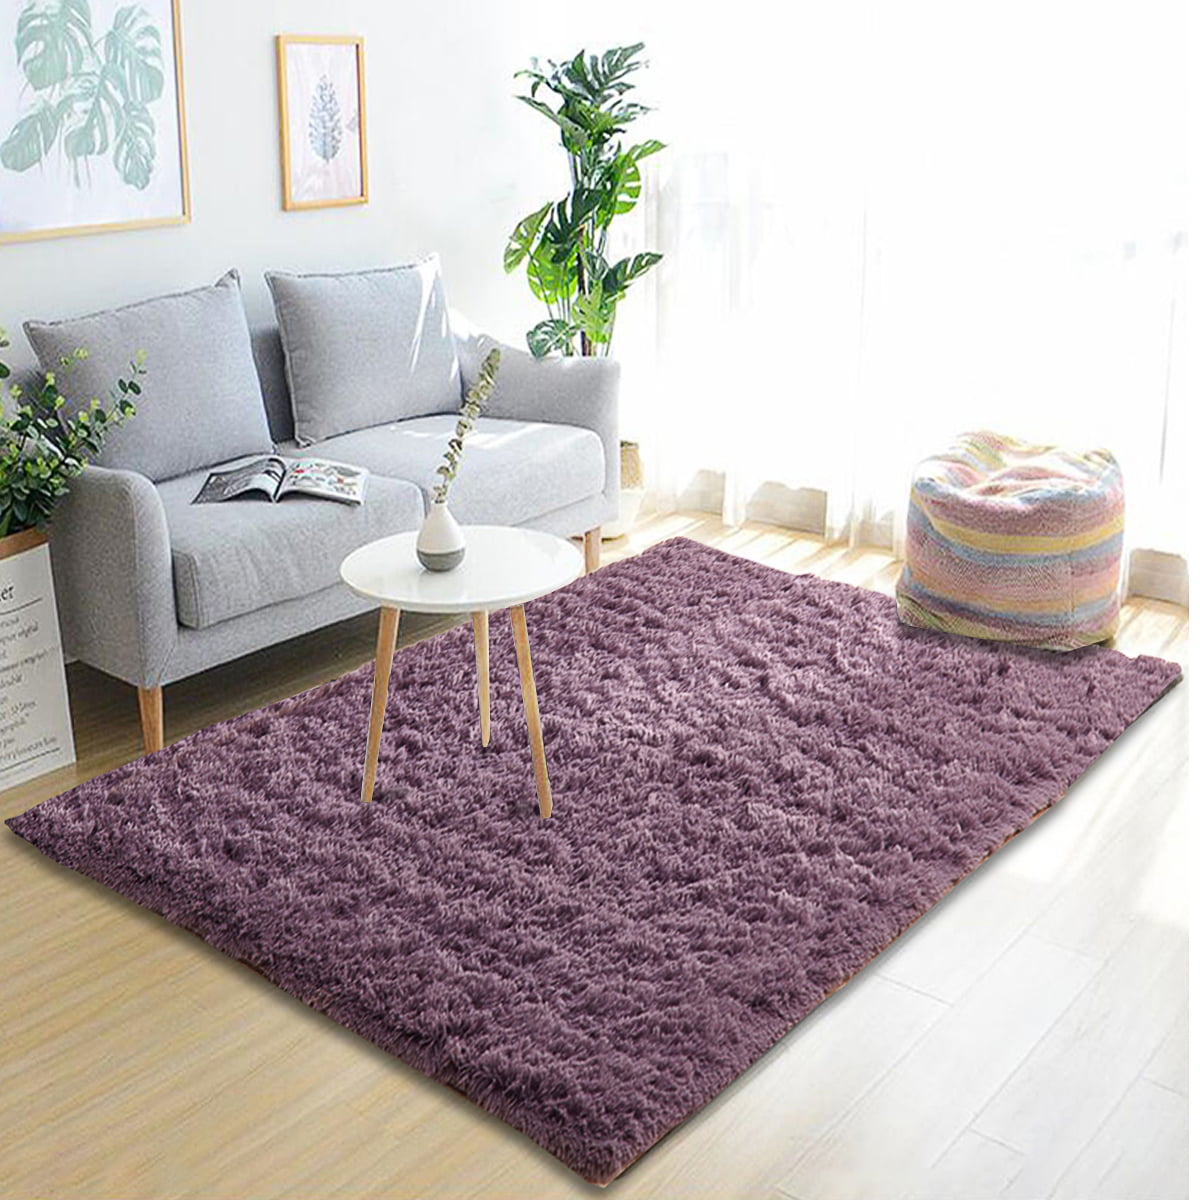 Large Shaggy Fluffy Rugs Anti-Skid Rug Dining Room Carpet Home Bedroom Floor Mat 